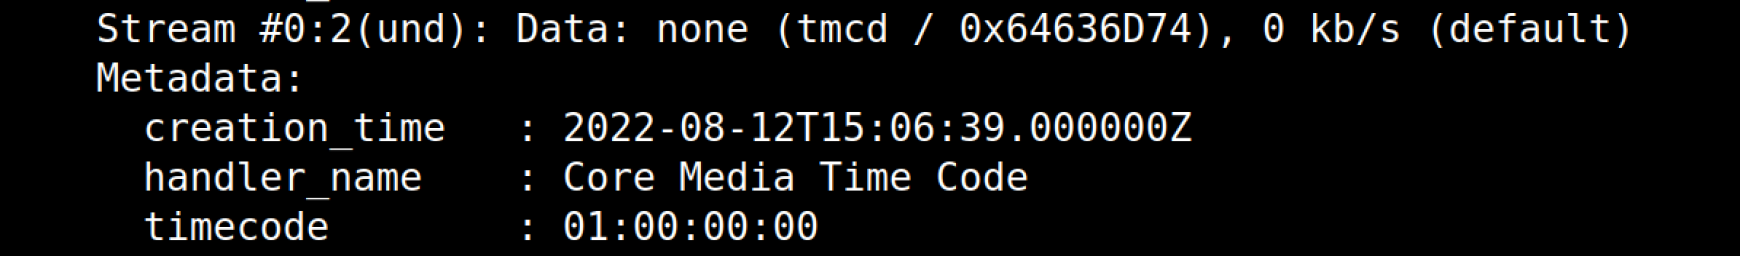 ffprobe showing tmcd timecode stream information